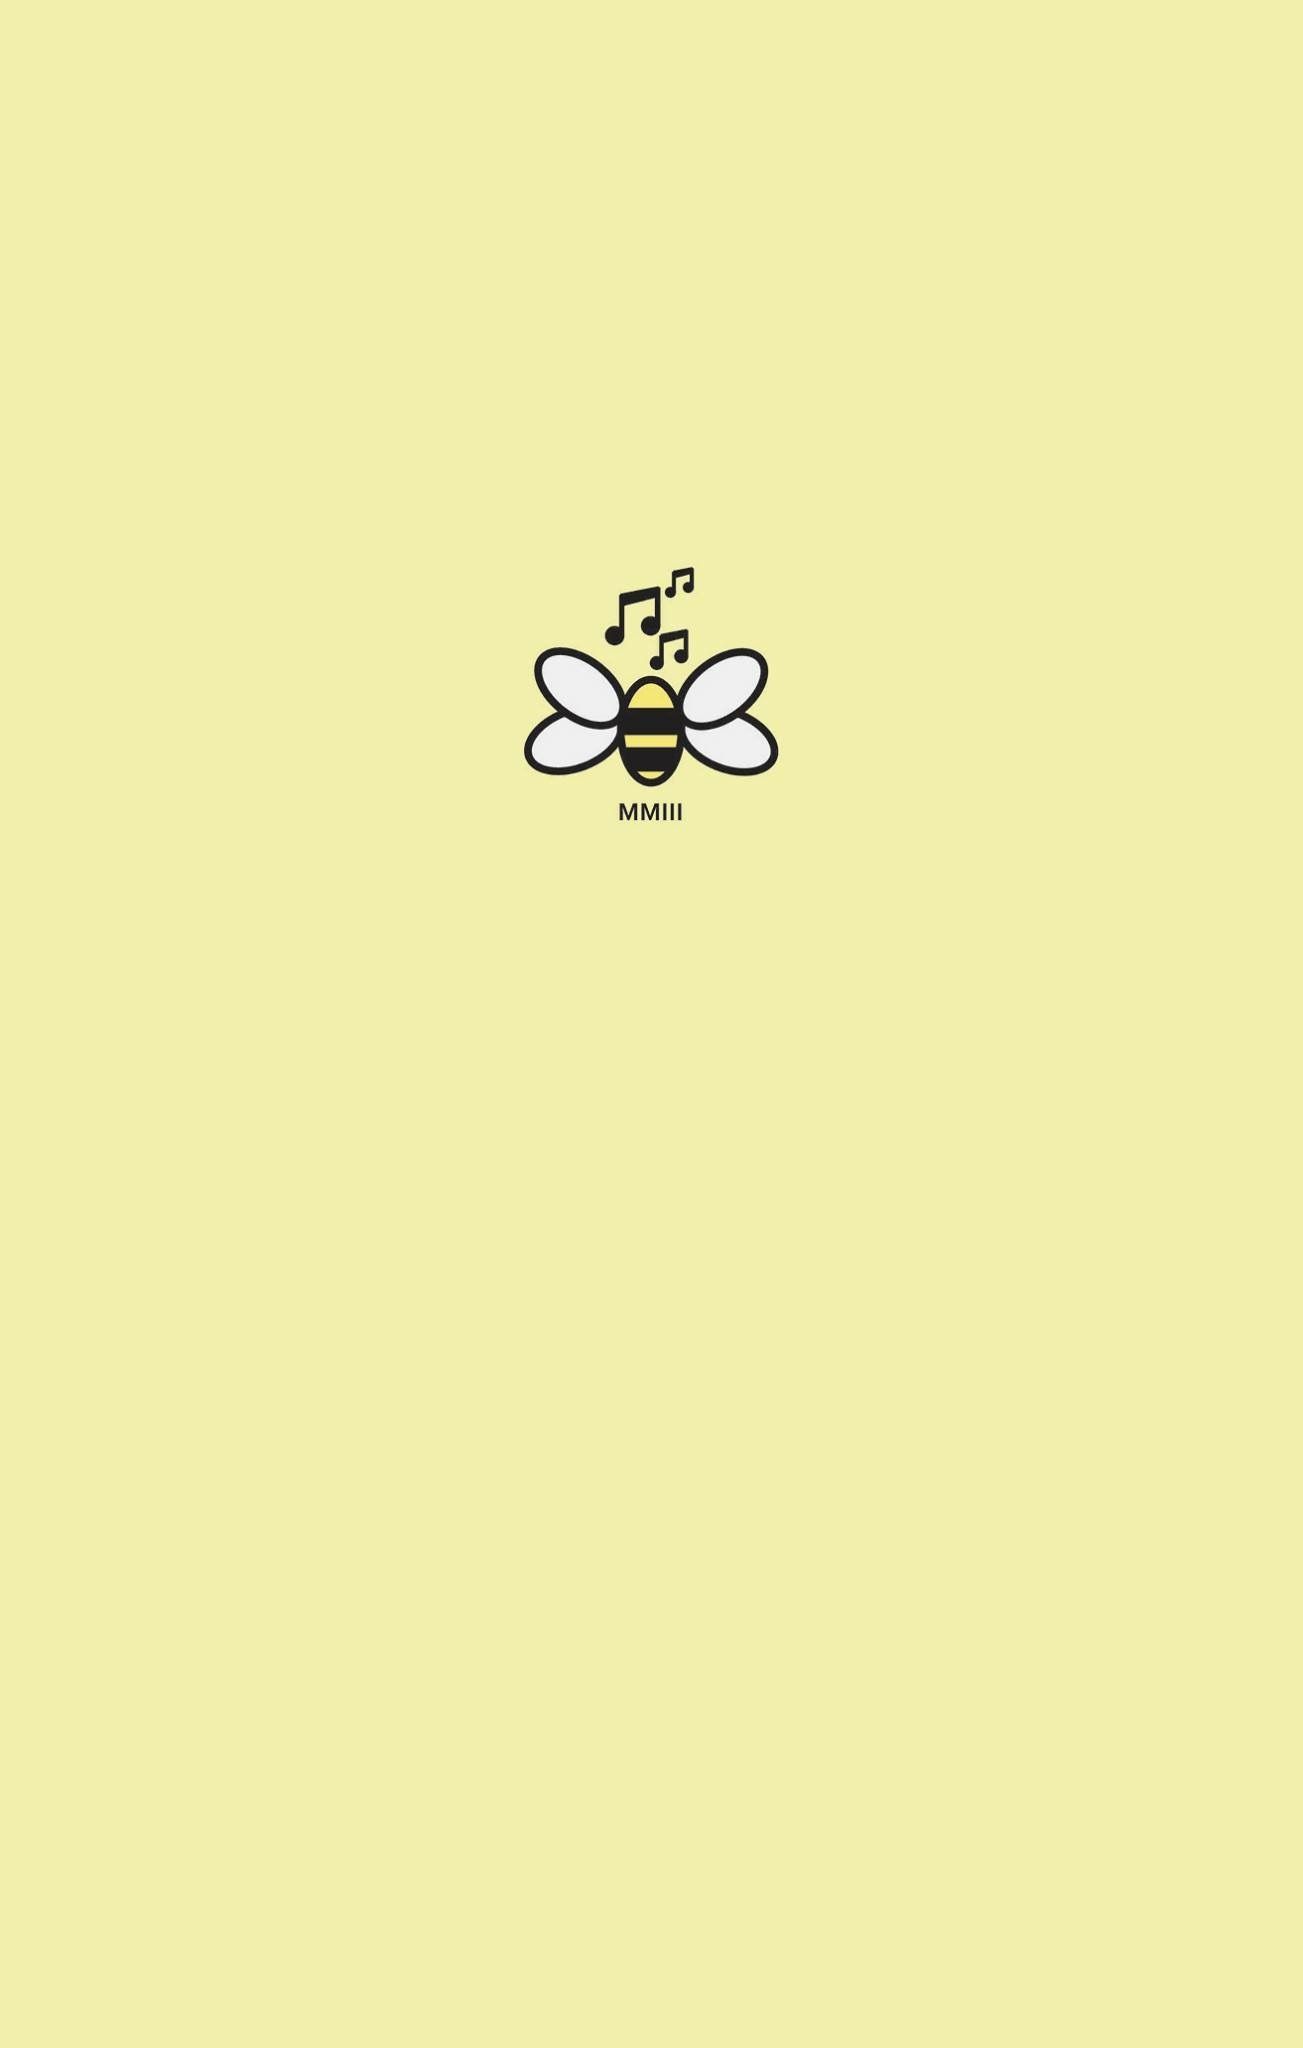 A bee logo on yellow background - Light yellow, yellow, bee, pastel yellow